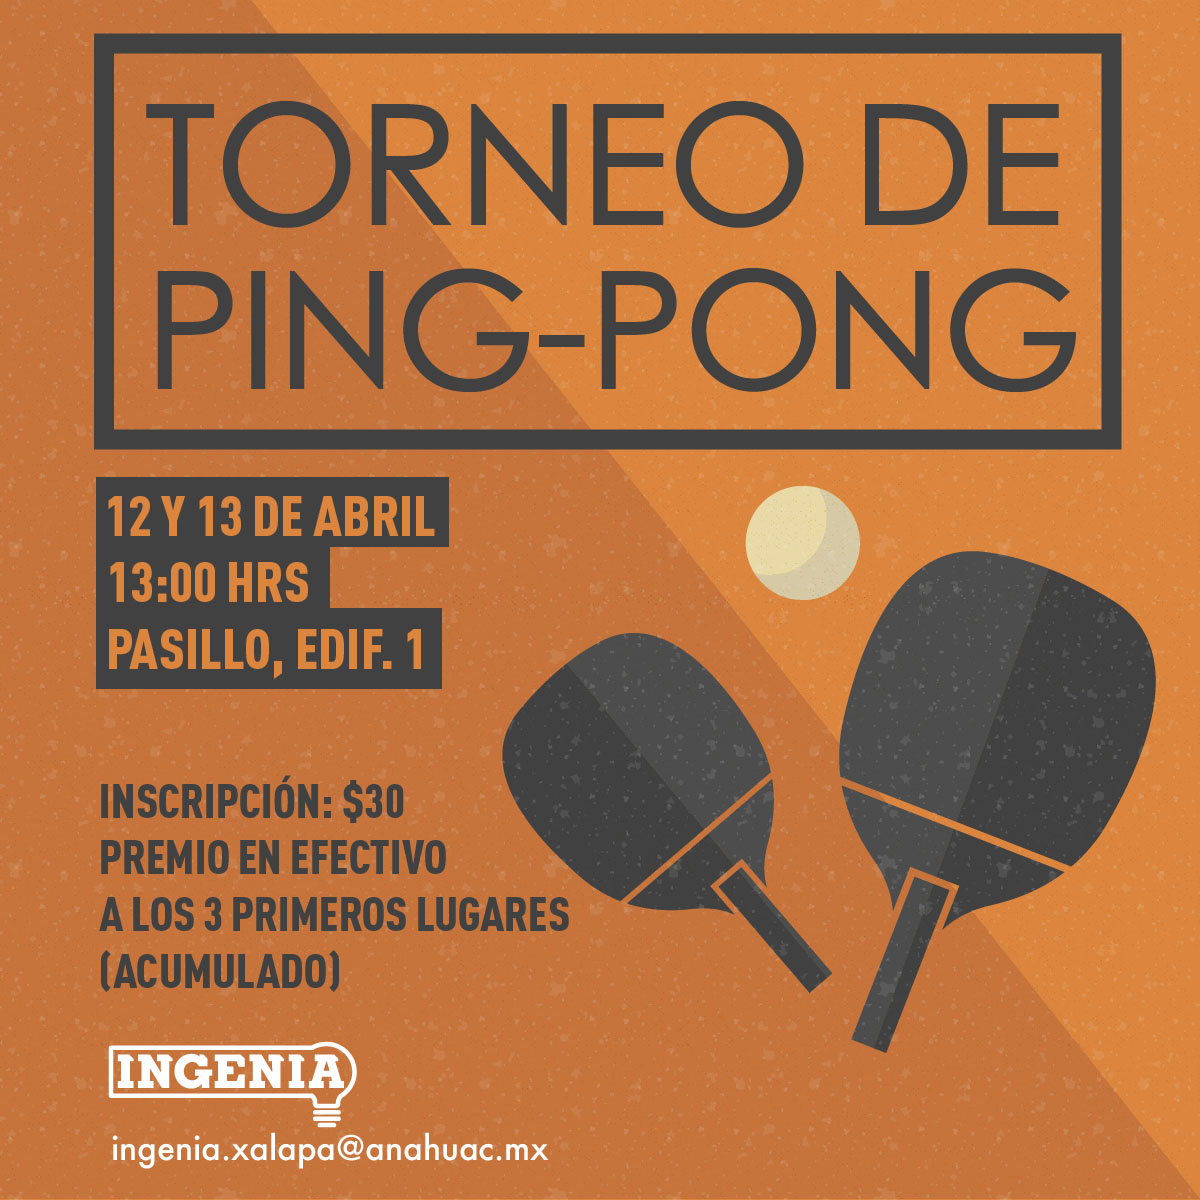 Torneo de Ping-Pong IngeniA 2018